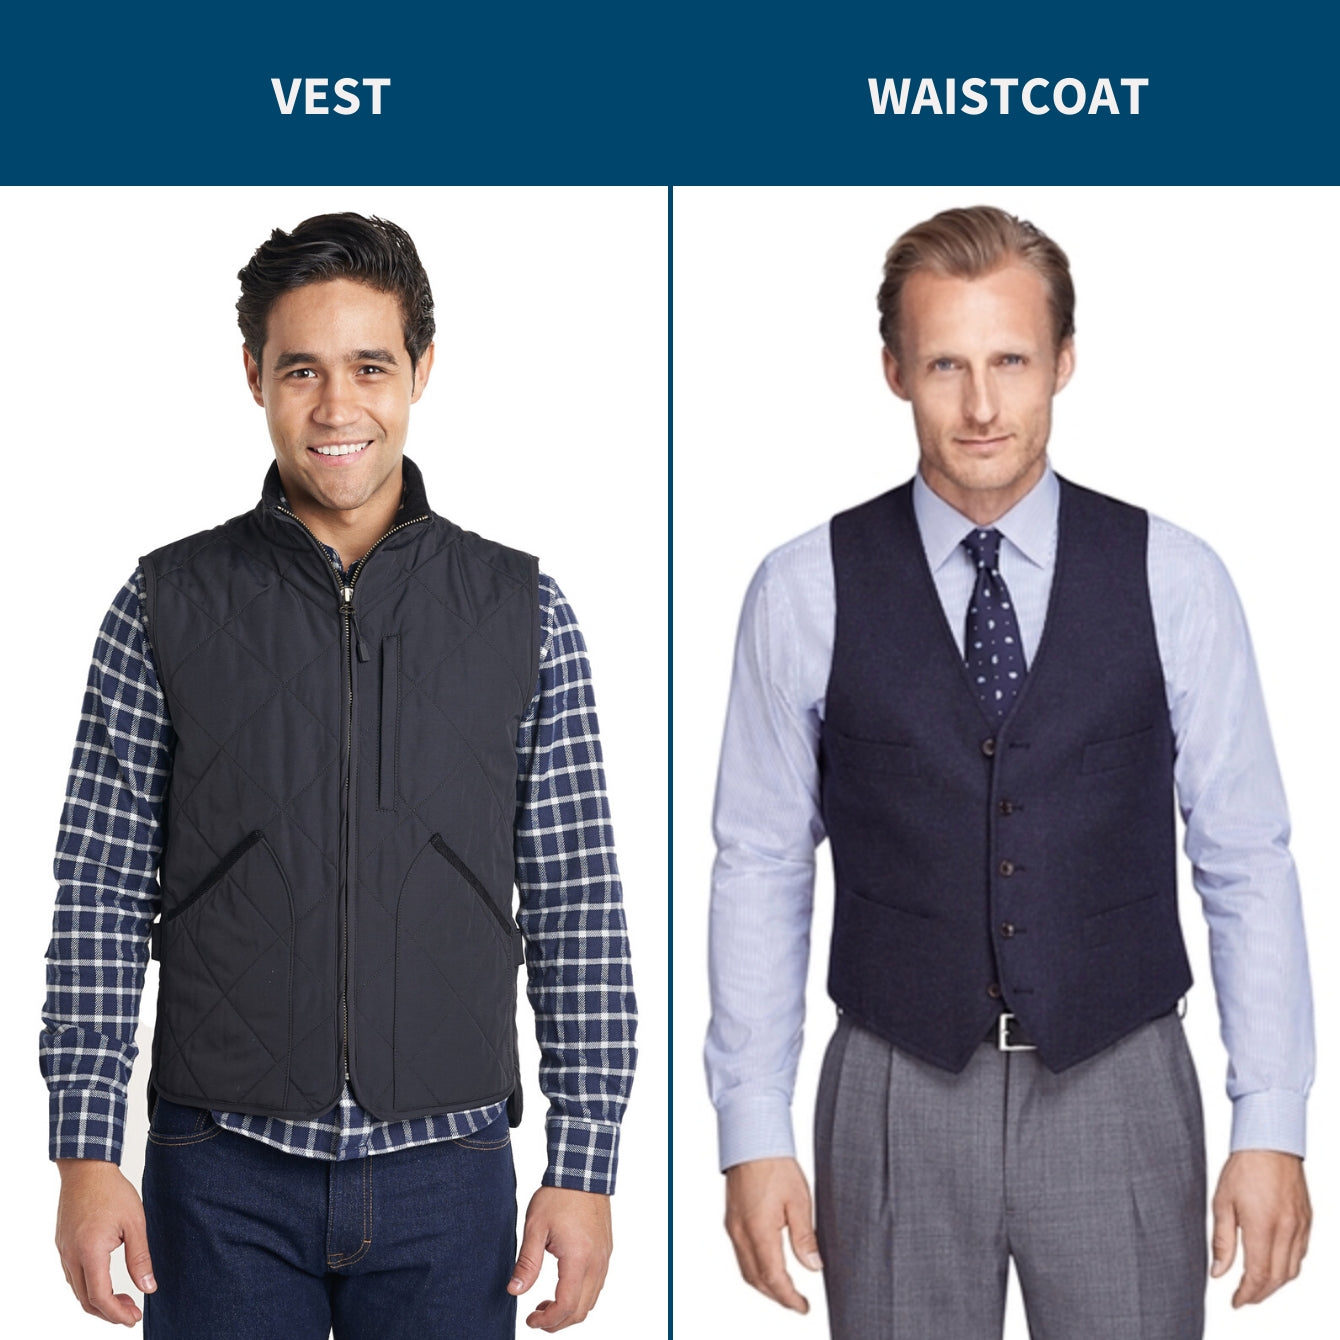 Vest vs waistcoat